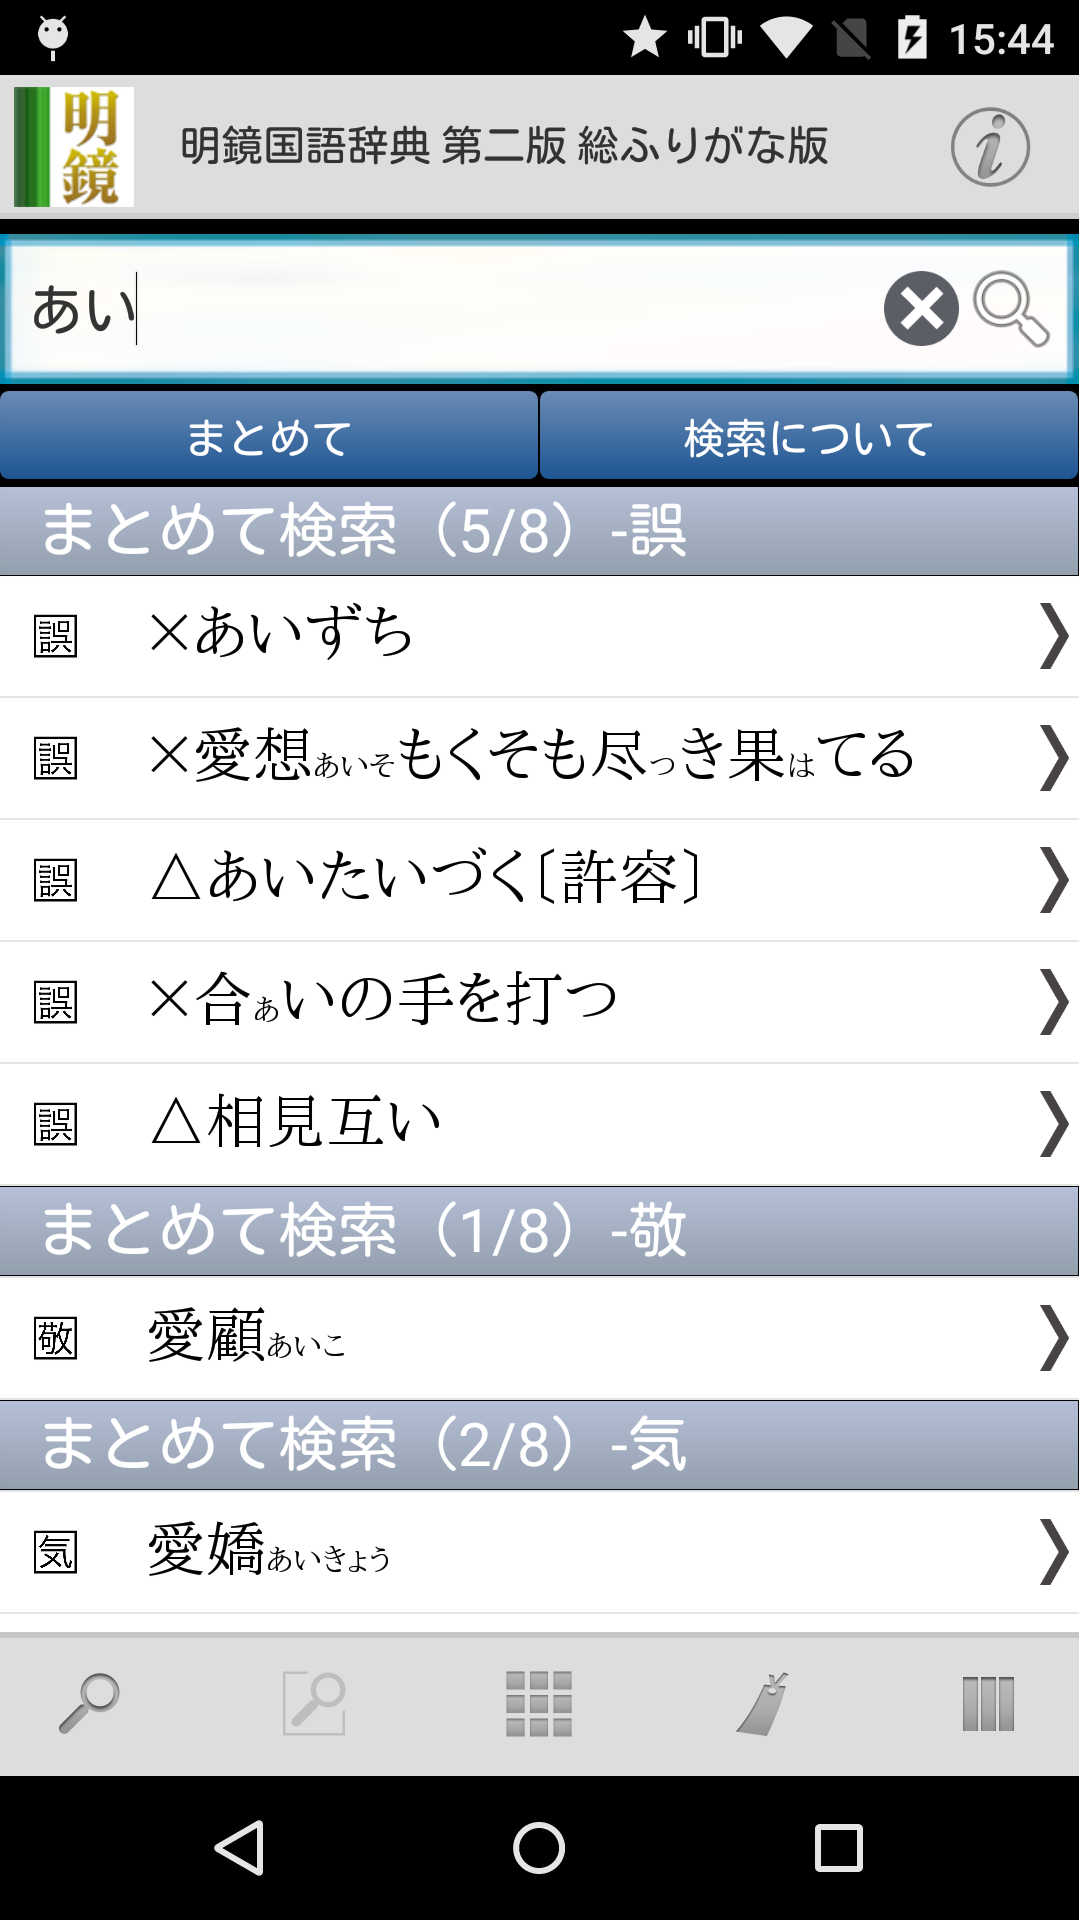 Android application 明鏡国語辞典 第二版 総ふりがな版 screenshort